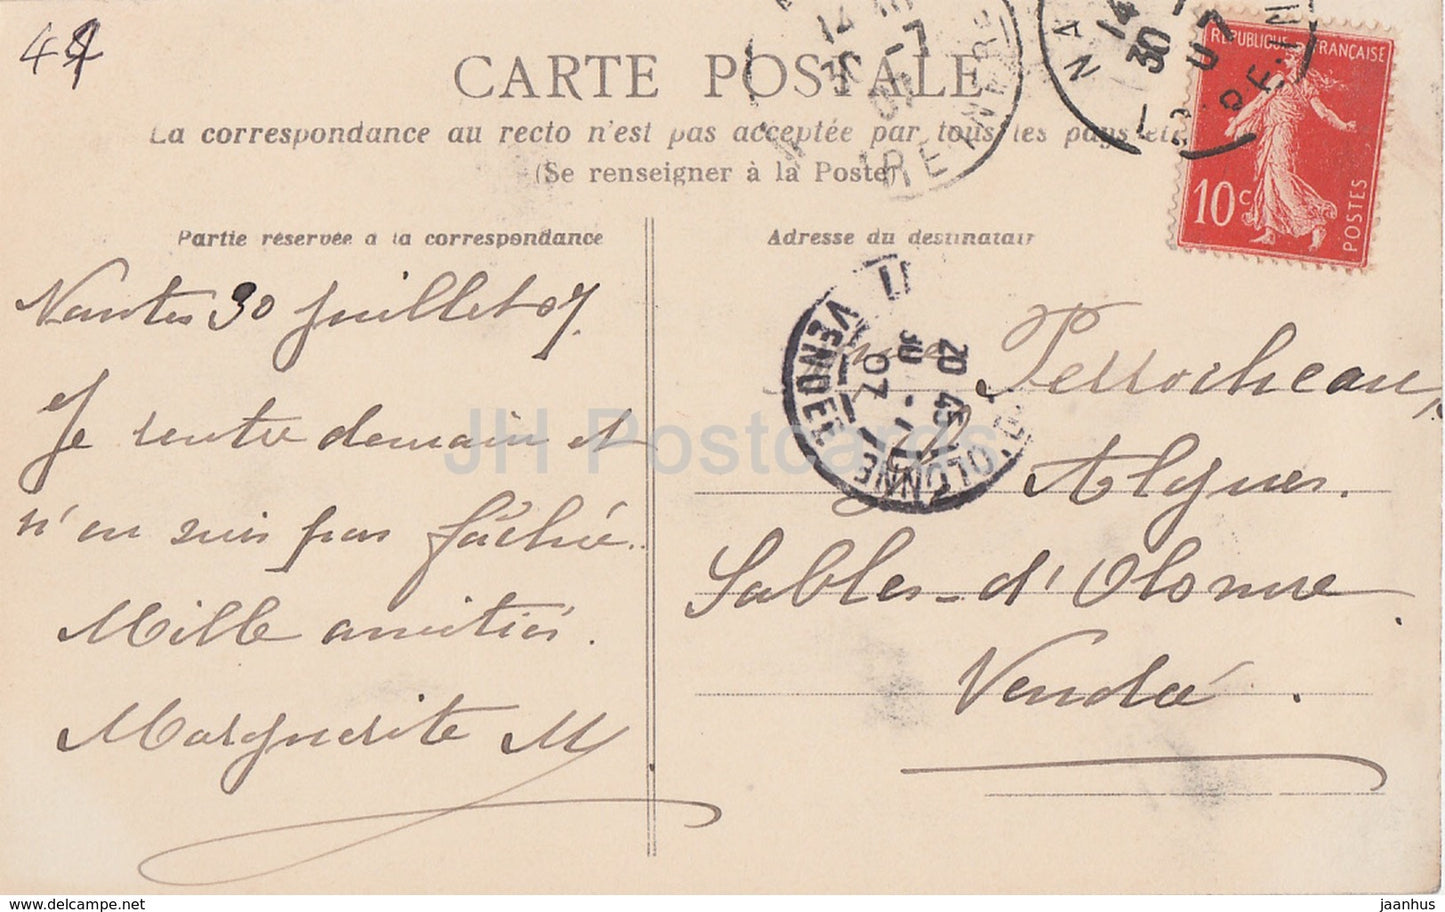 Nantes - Le Chateau - Entree Principale - castle - old postcard - 1907 - France - used